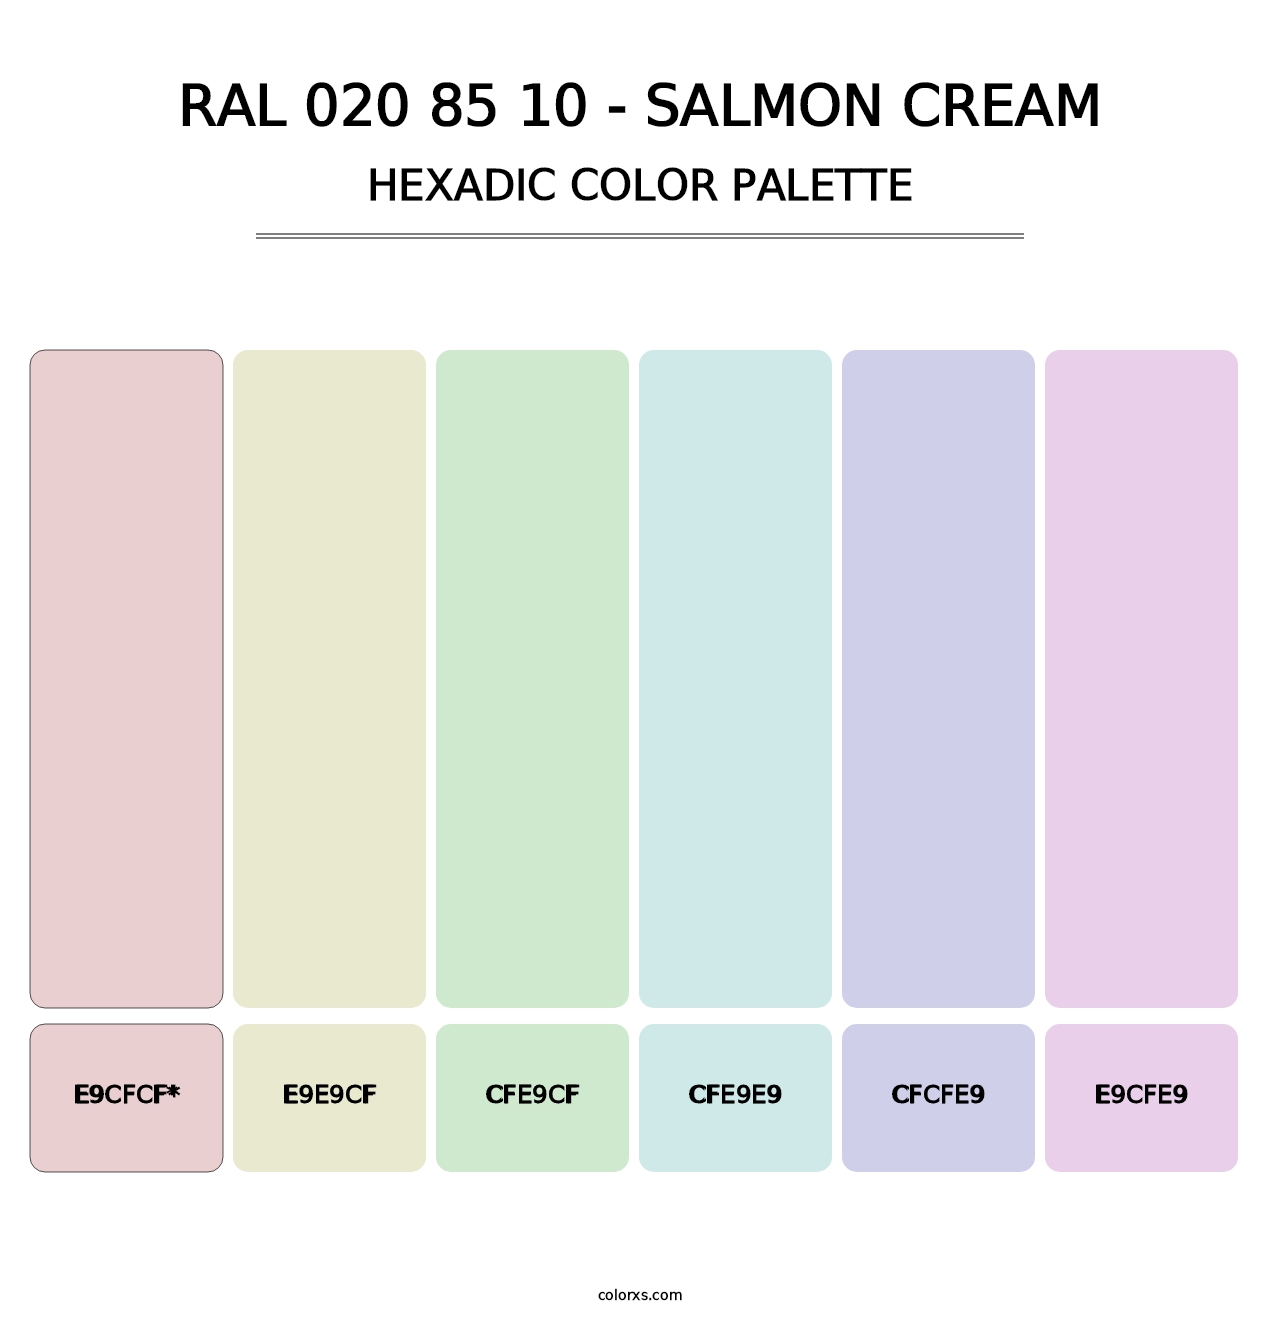 RAL 020 85 10 - Salmon Cream - Hexadic Color Palette